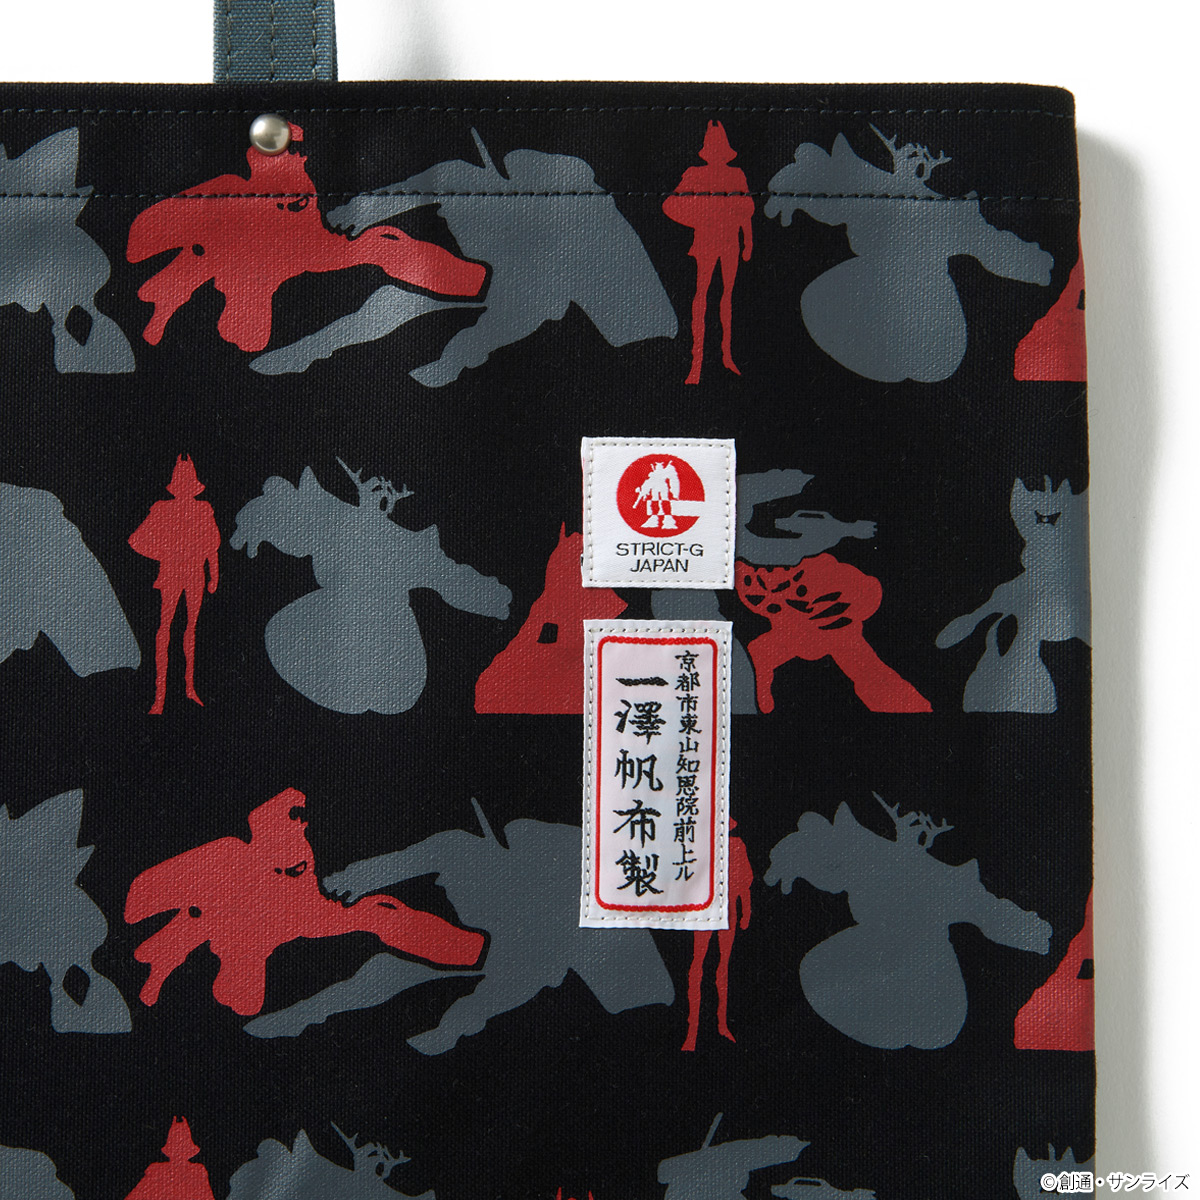 STRICT-G JAPAN 一澤帆布製『機動戦士ガンダム』トートバッグ 赤い彗星 